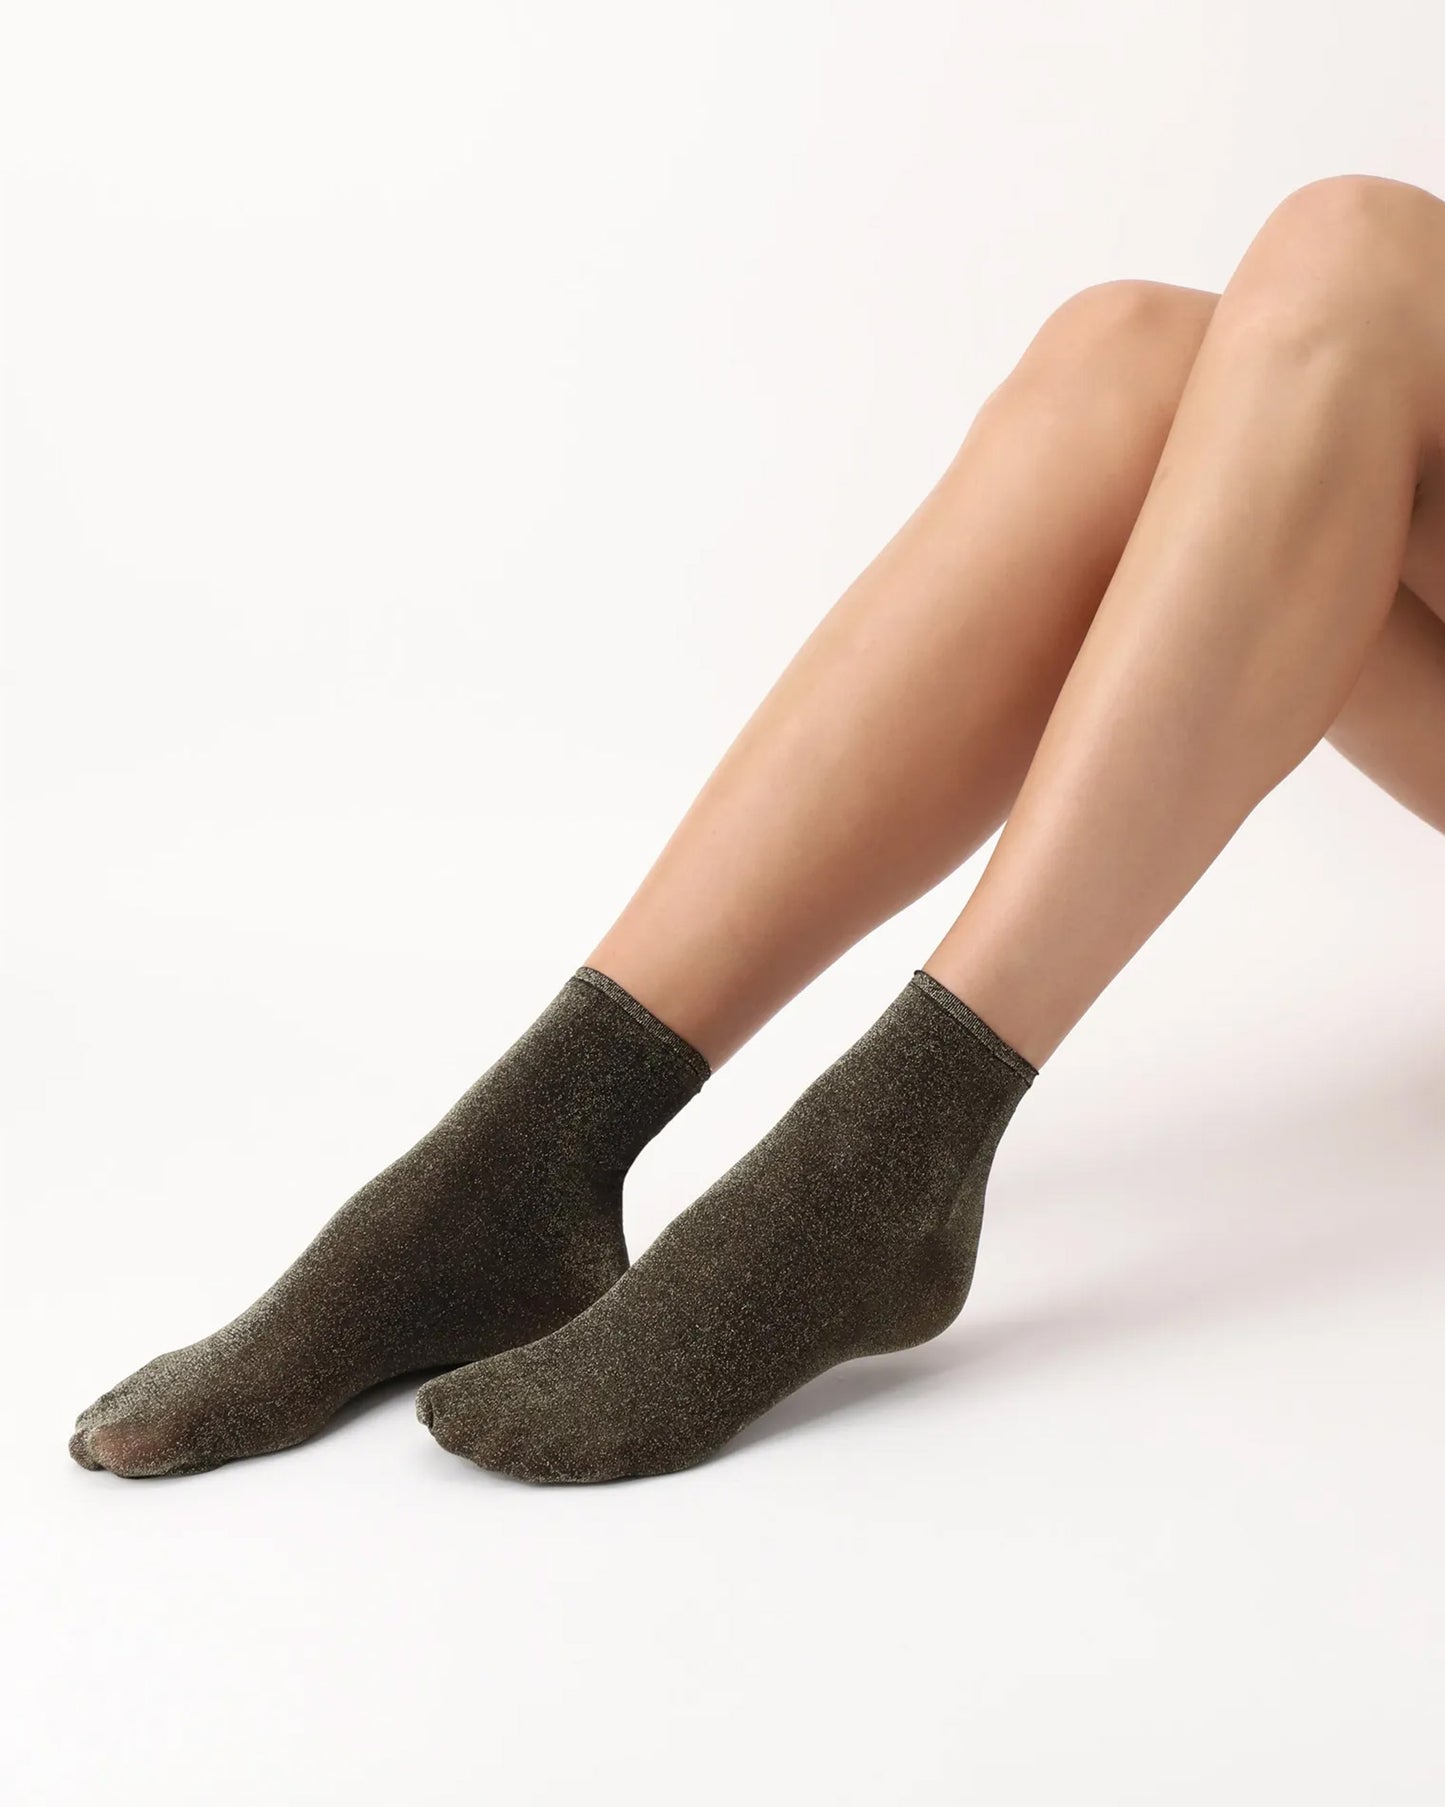 Oroblu Diamonds Sock - Black opaque sparkly lamé ankle socks with gold metallic yarn